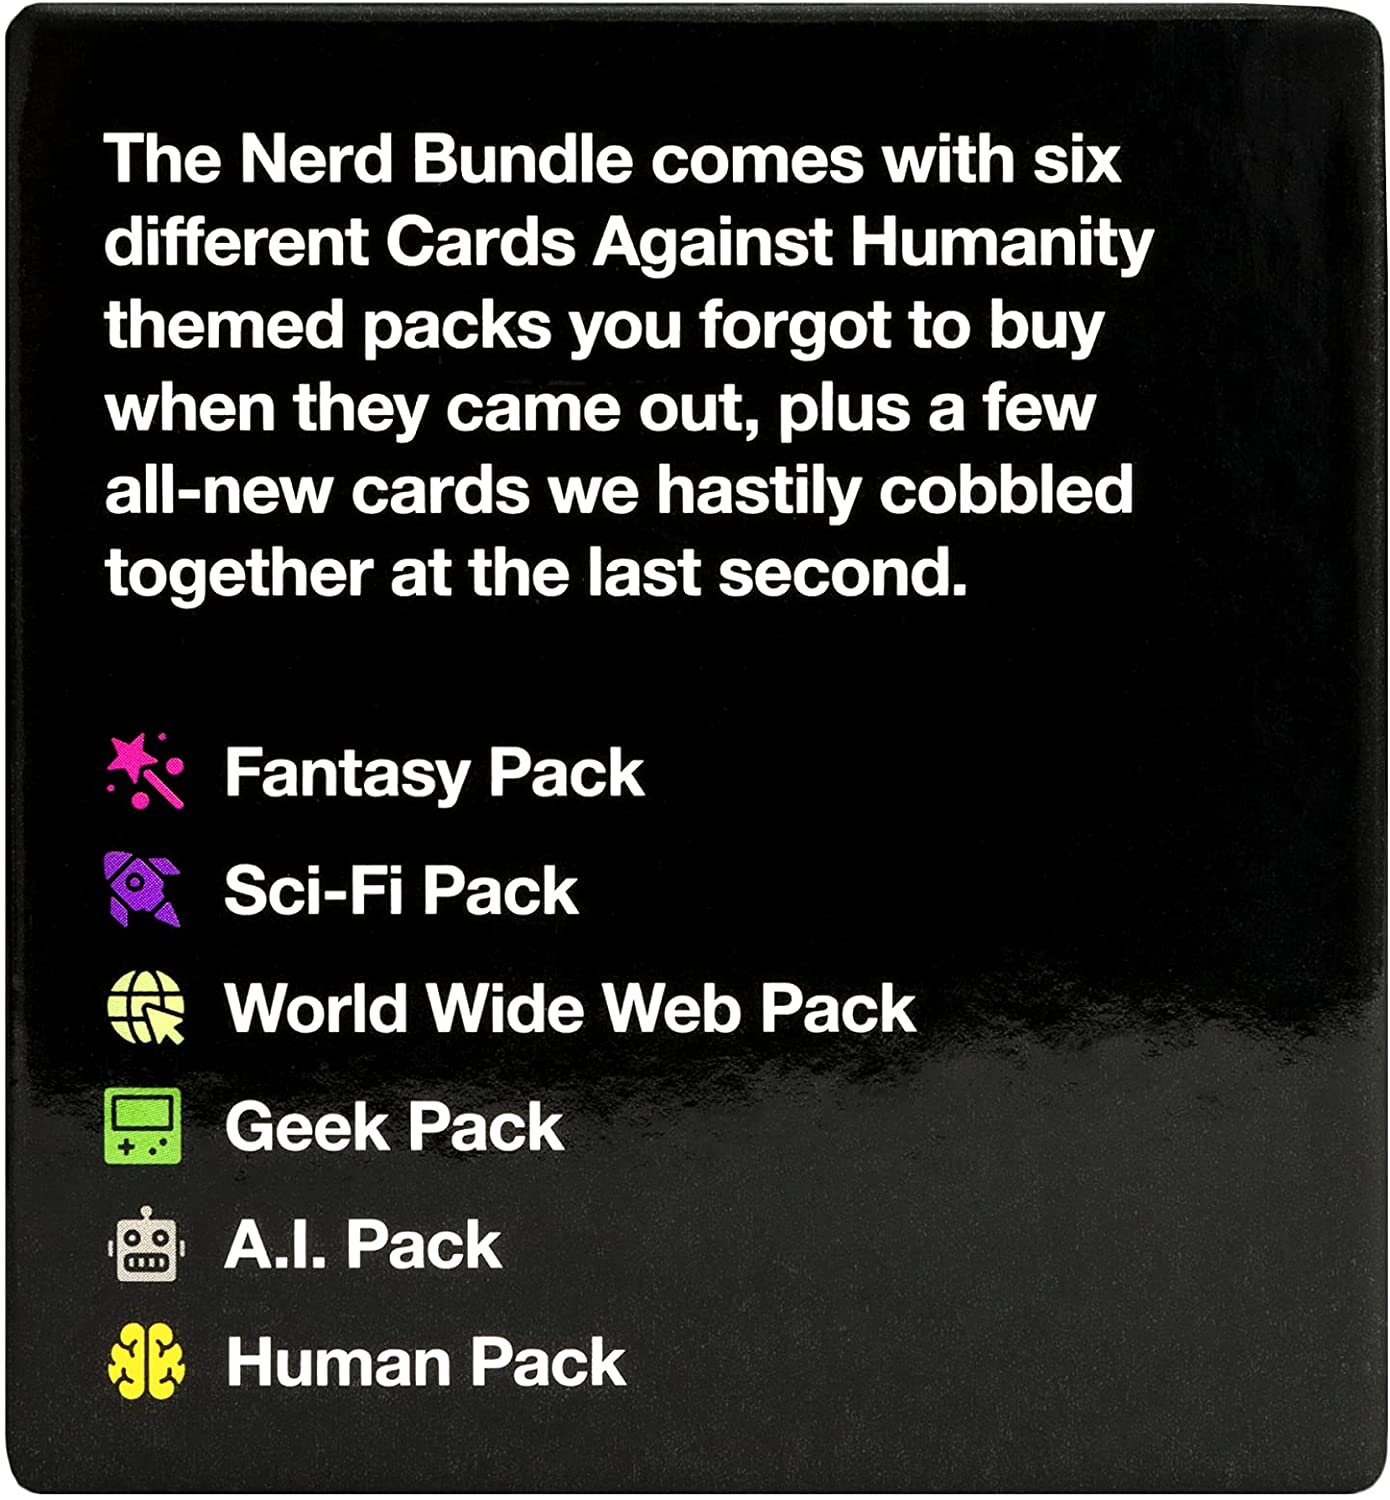 Nerd Bundle - Cards Against Humanity